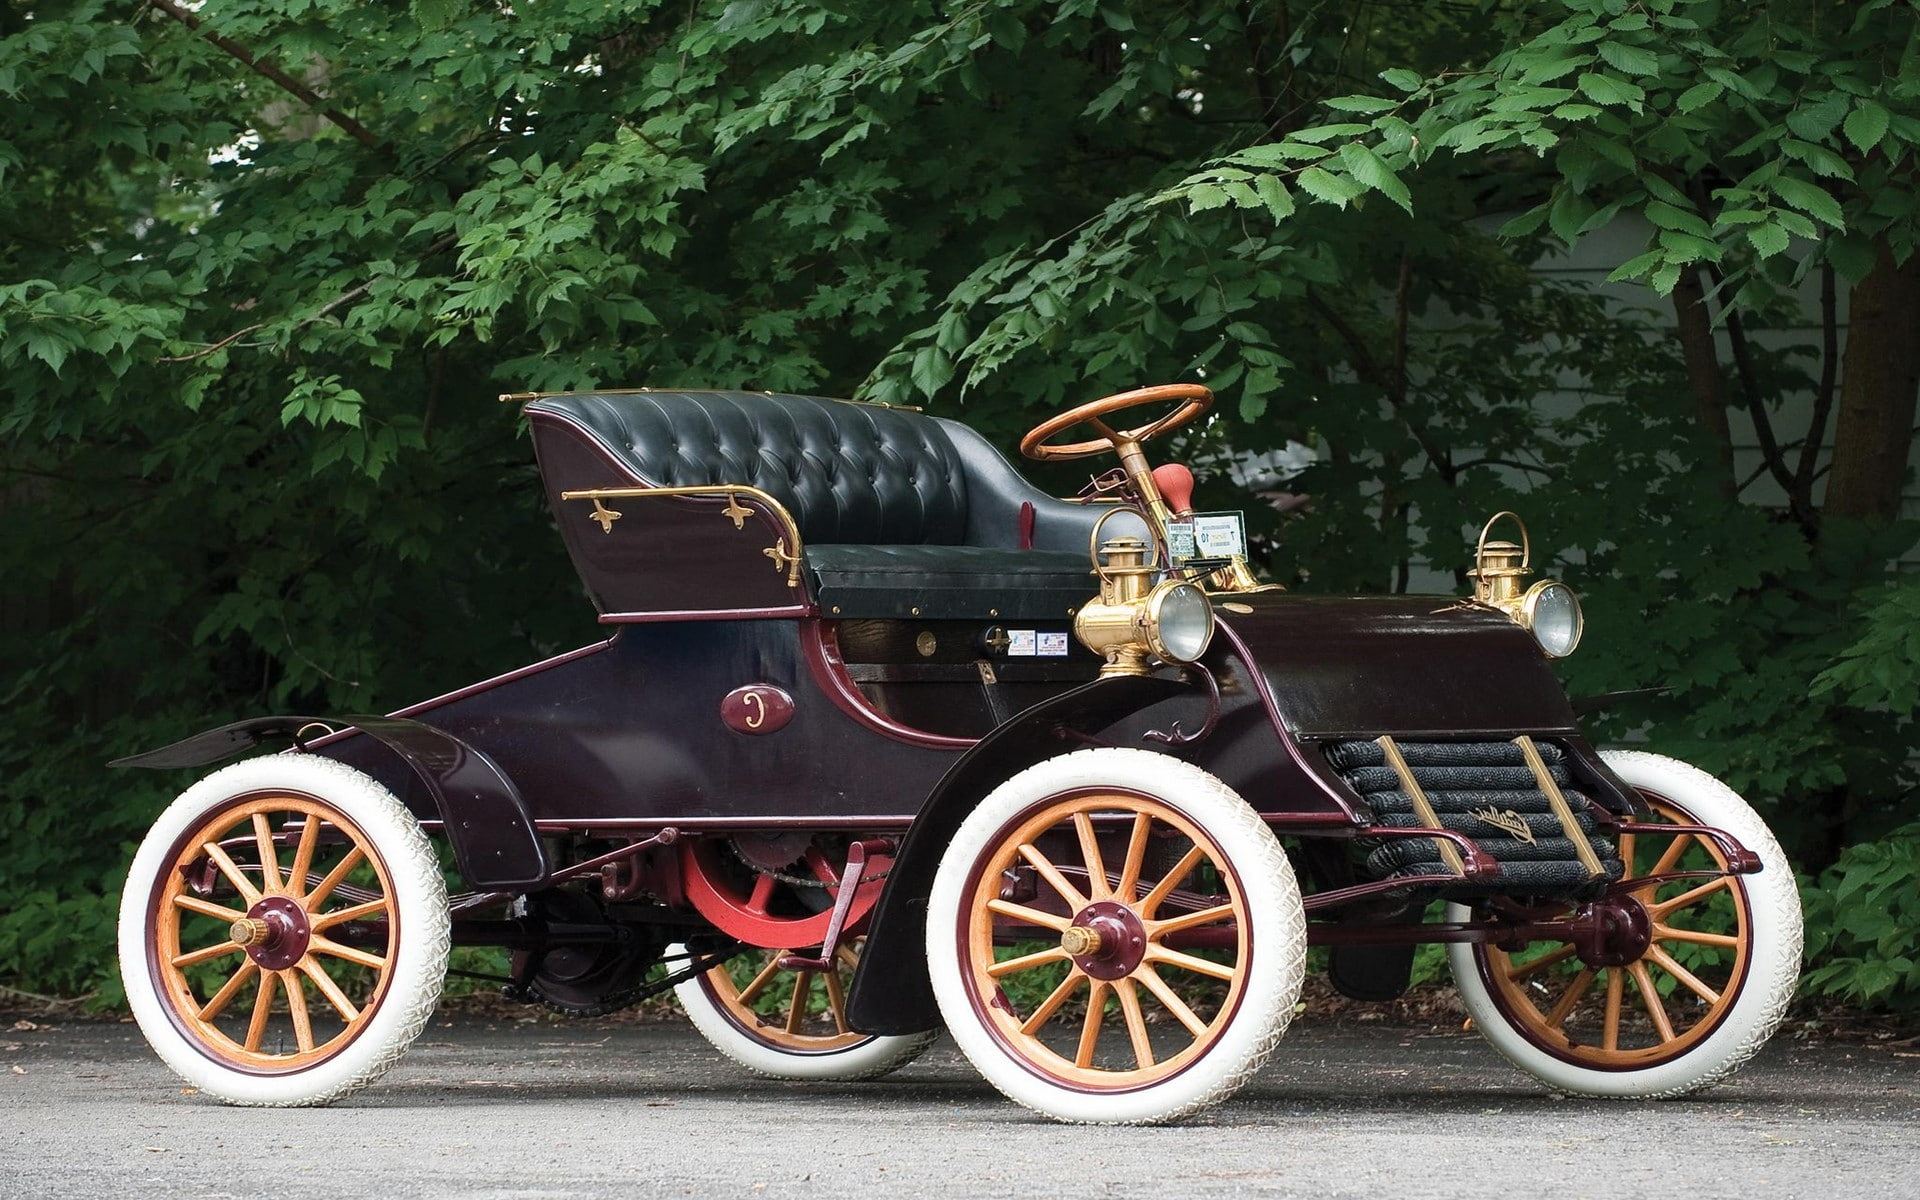 1903 cadillac car vintage, transportation, plant, mode of transportation